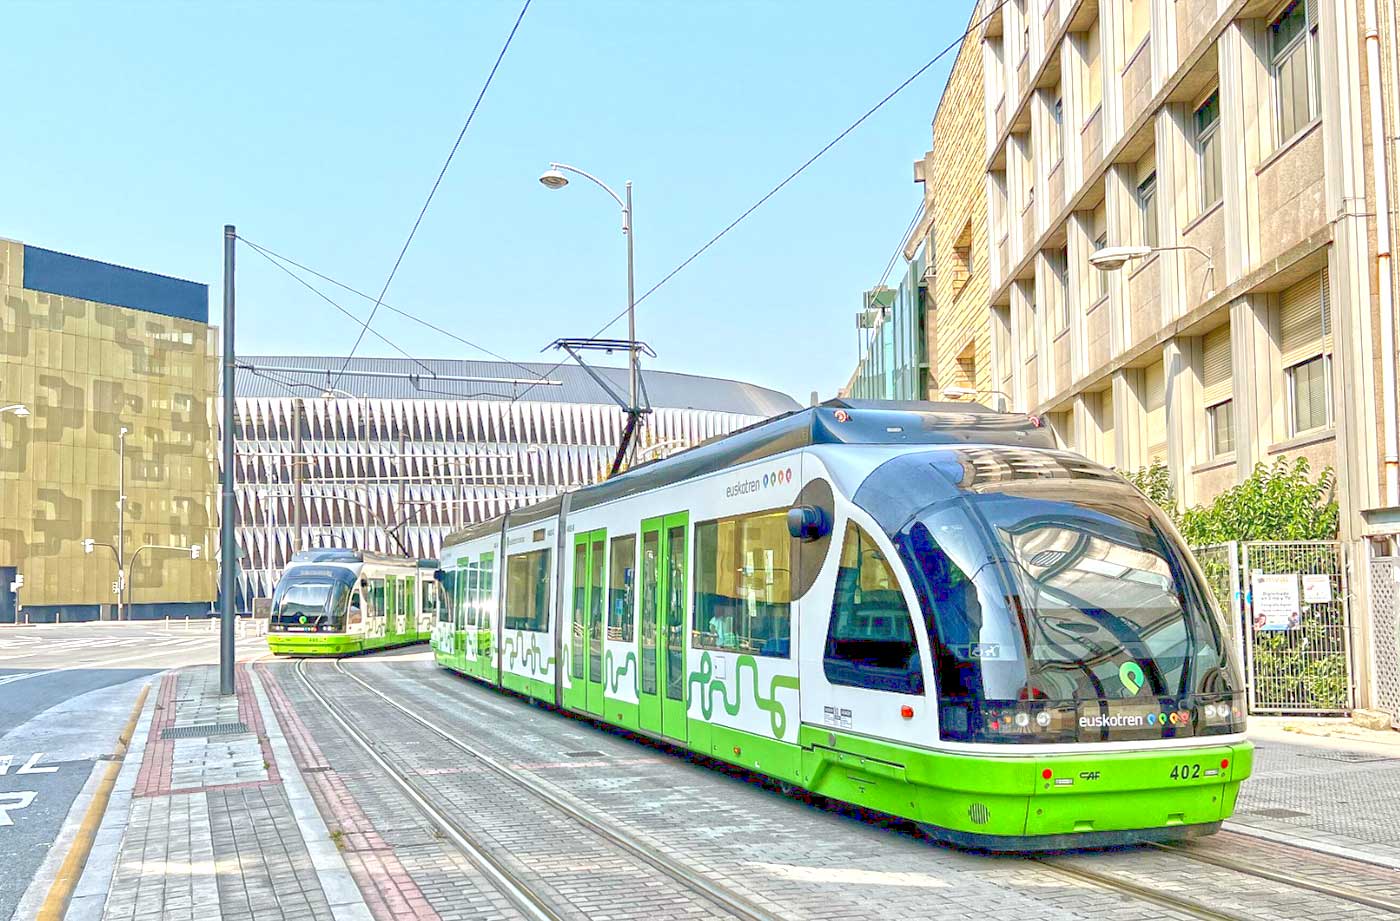 Bilbao City Public Transport - Tram